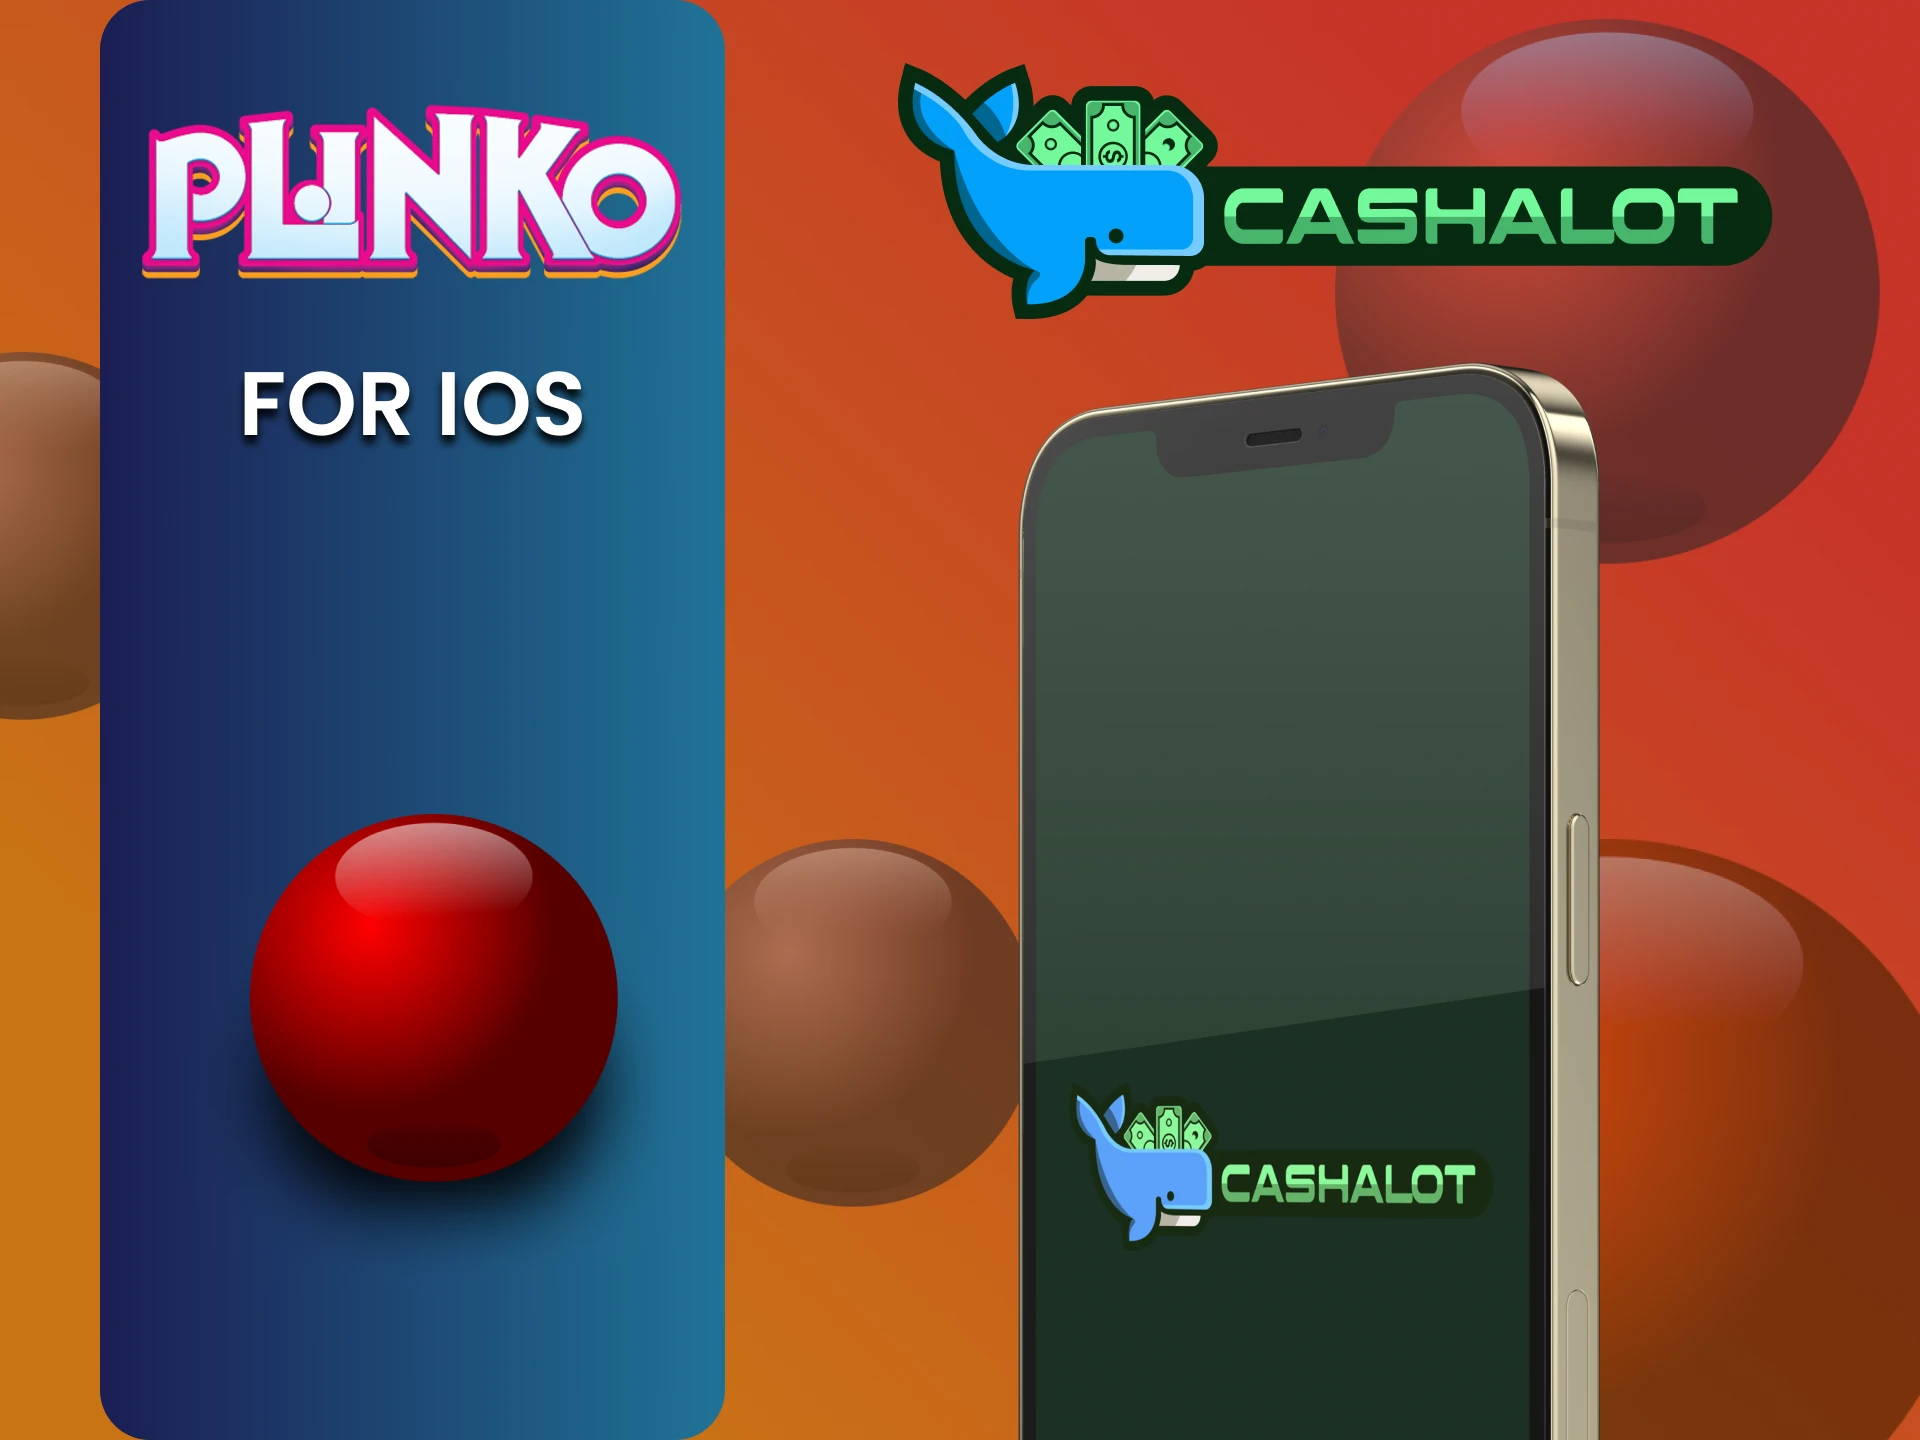 Install the Cashalot app on iOS to play Plinko.